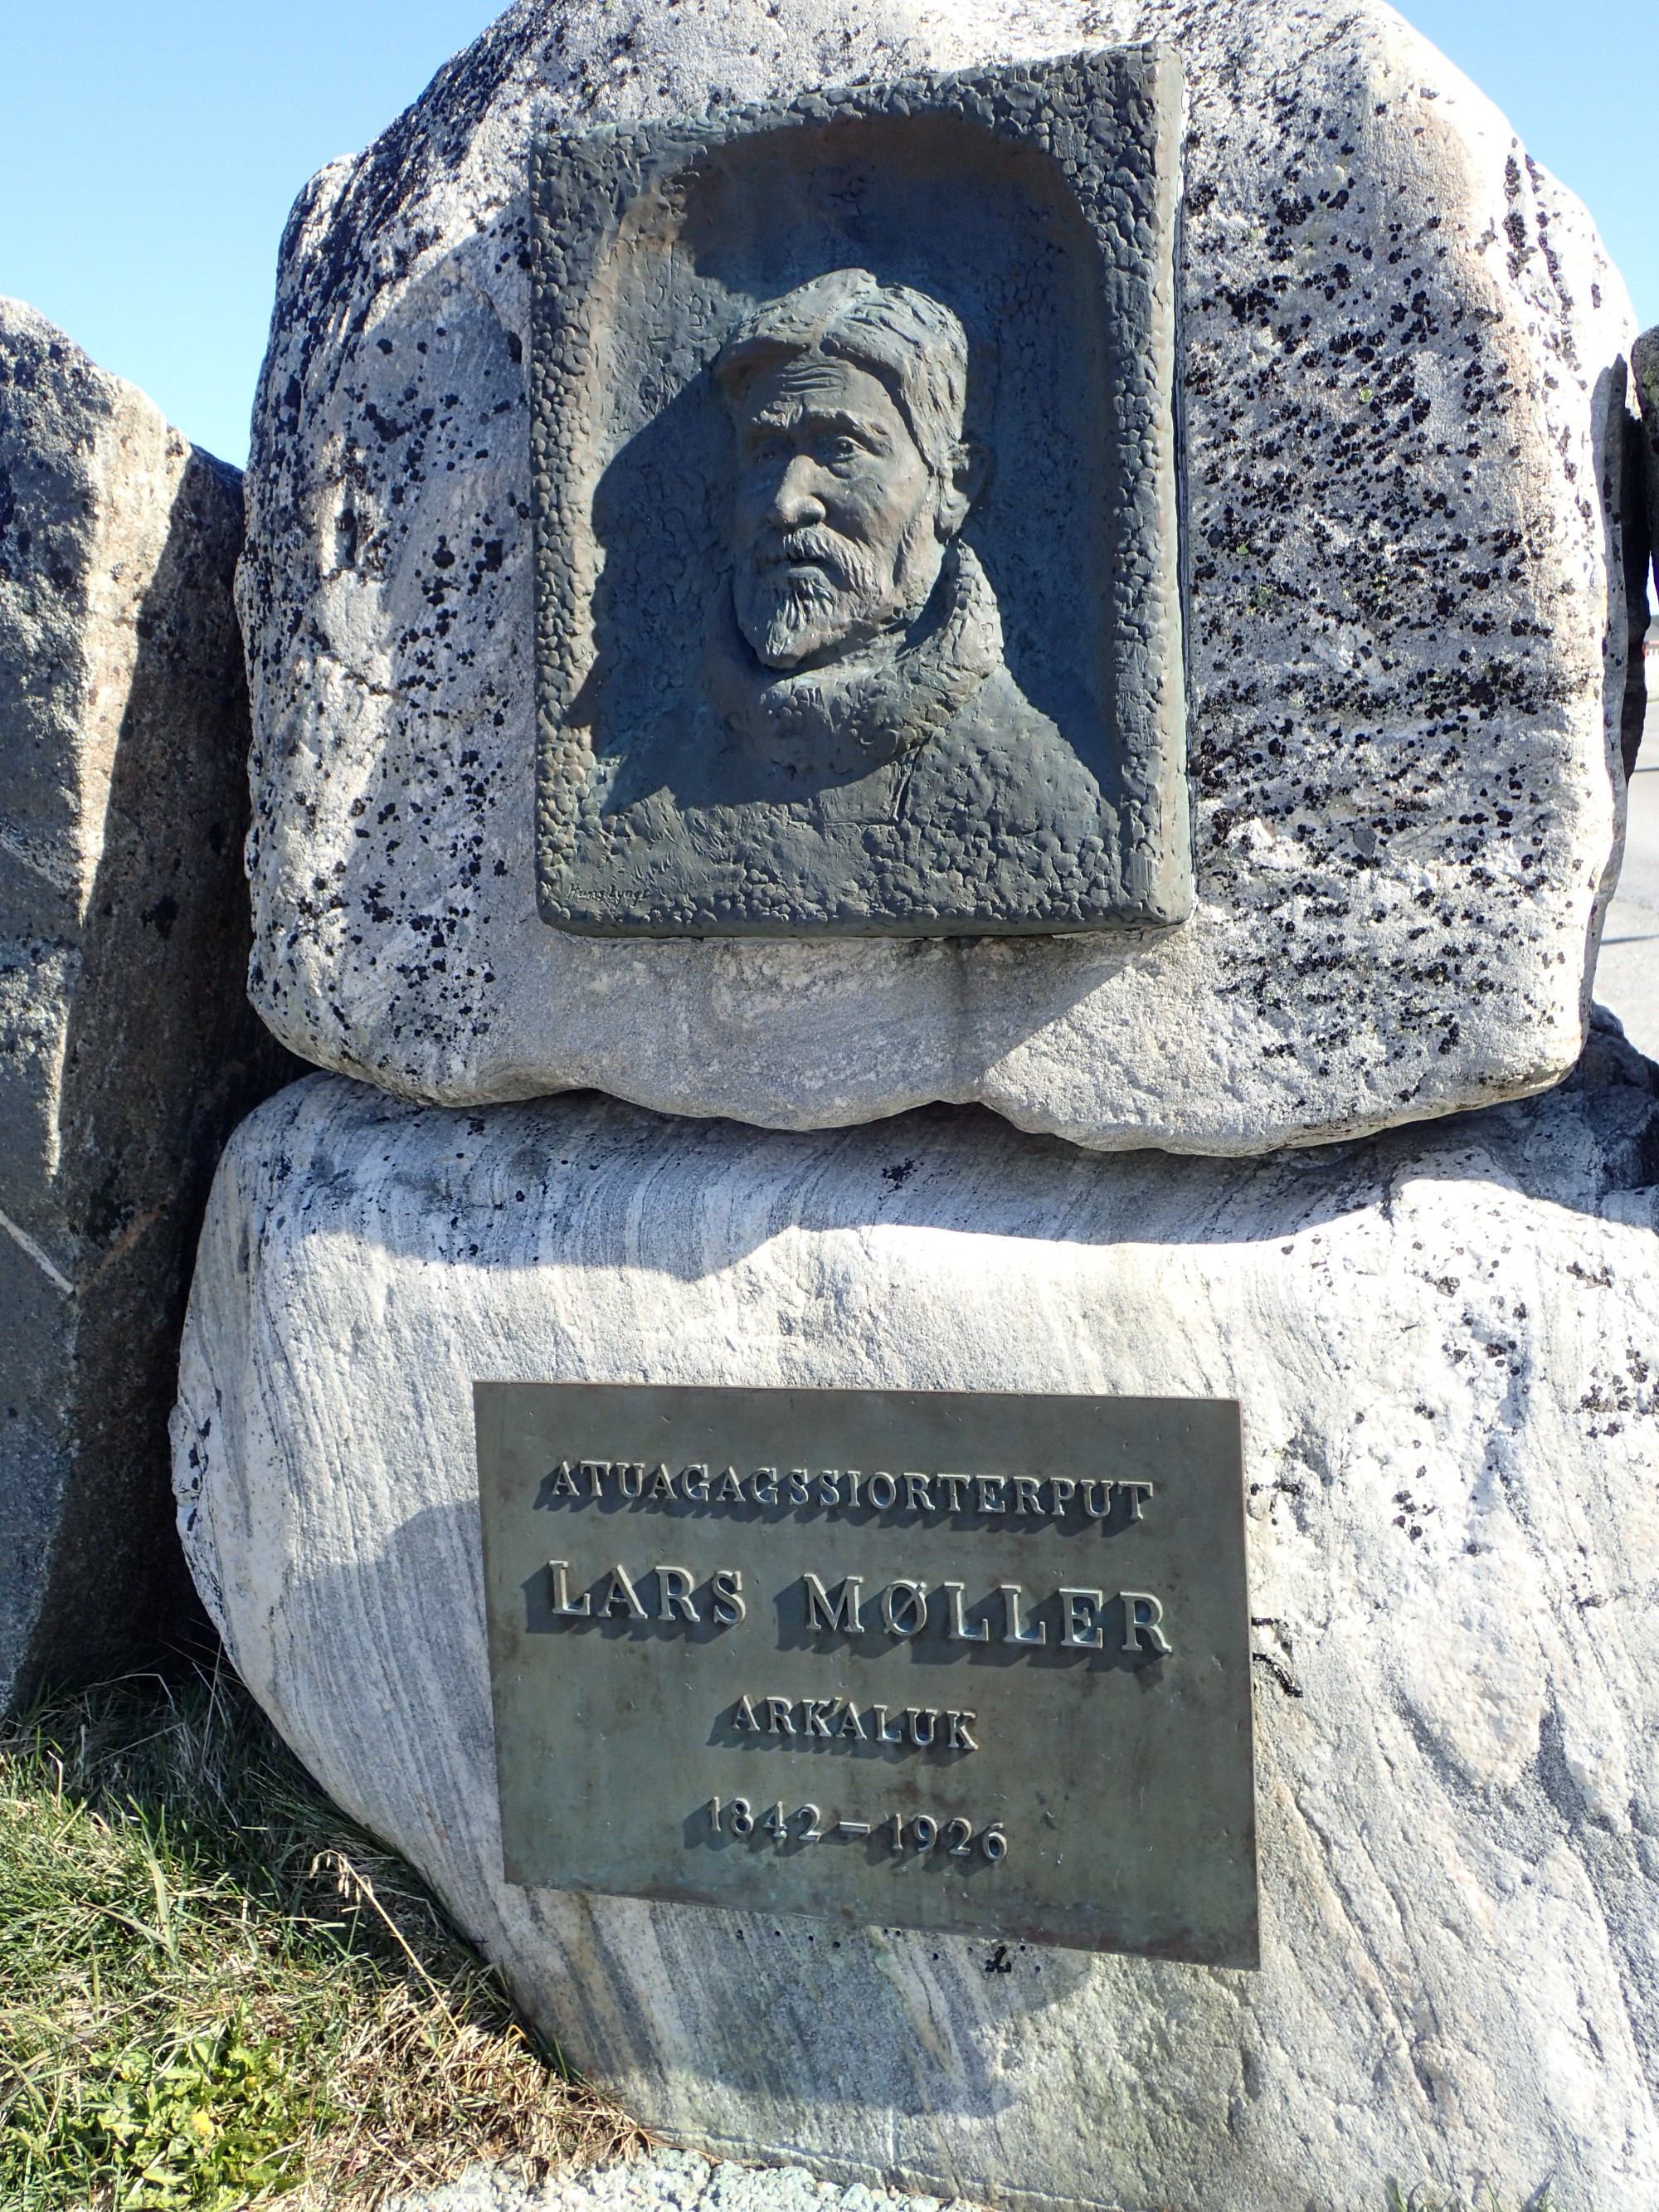 Lars Moller Memorial, Greenland